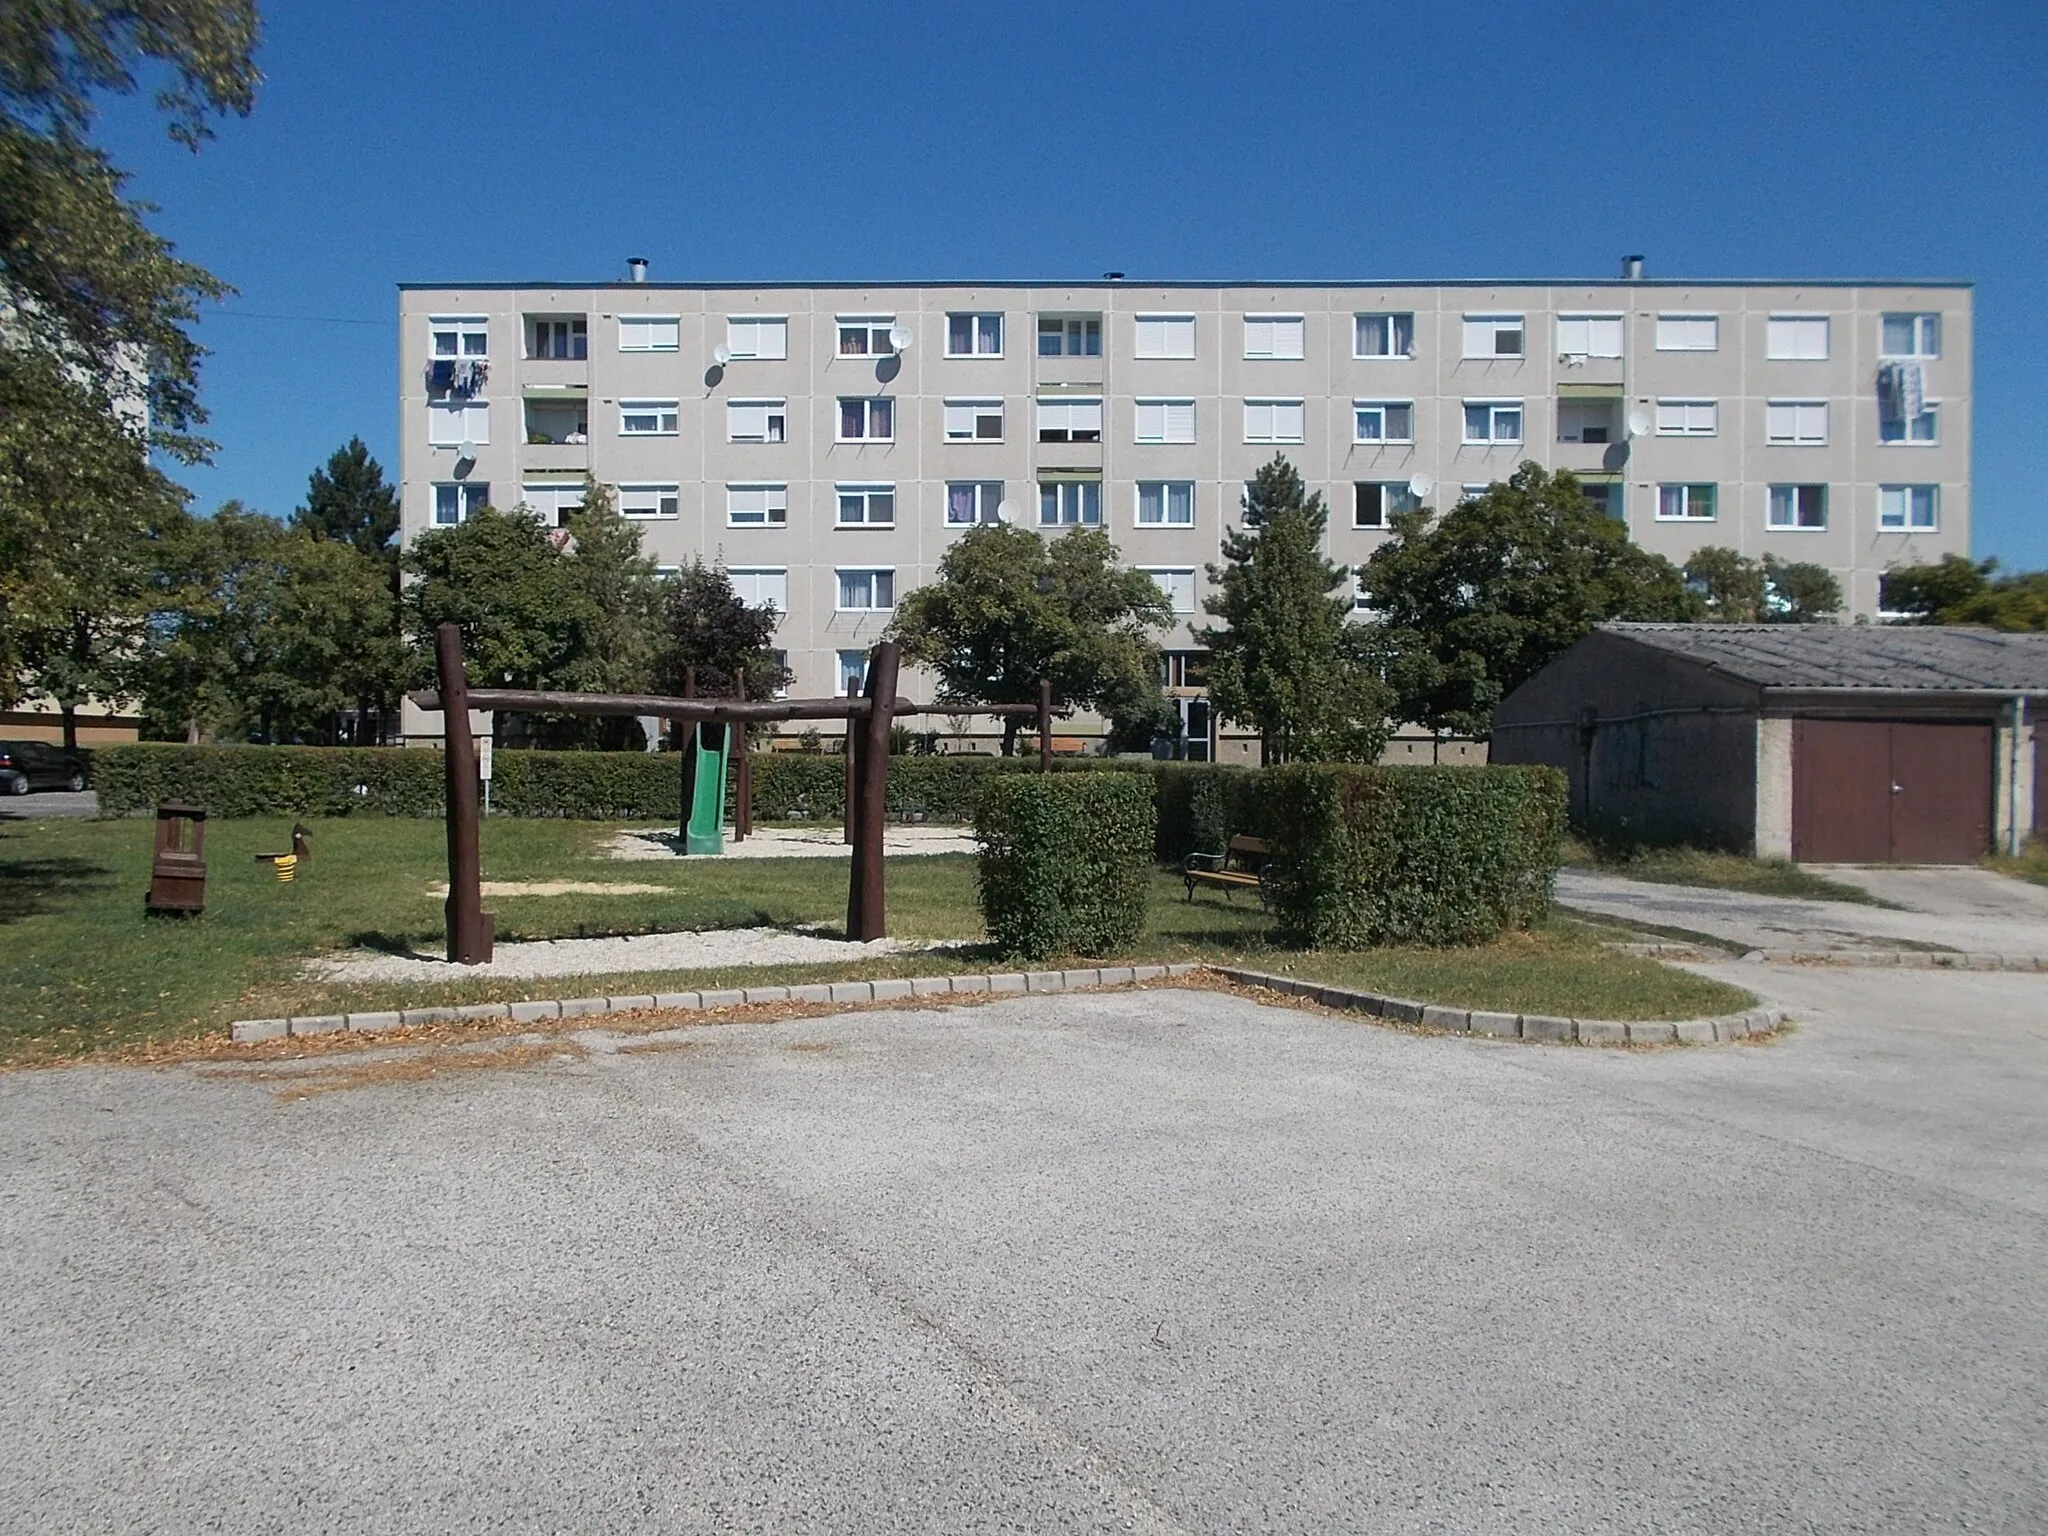 Photo showing: : Housing estate playground. Five floor Sümegi út Plattenbau apartment building (1960s, 1969?) and part of the garage line. - Sümegi út, West neighborough, Tapolca, Veszprém County, Hungary.